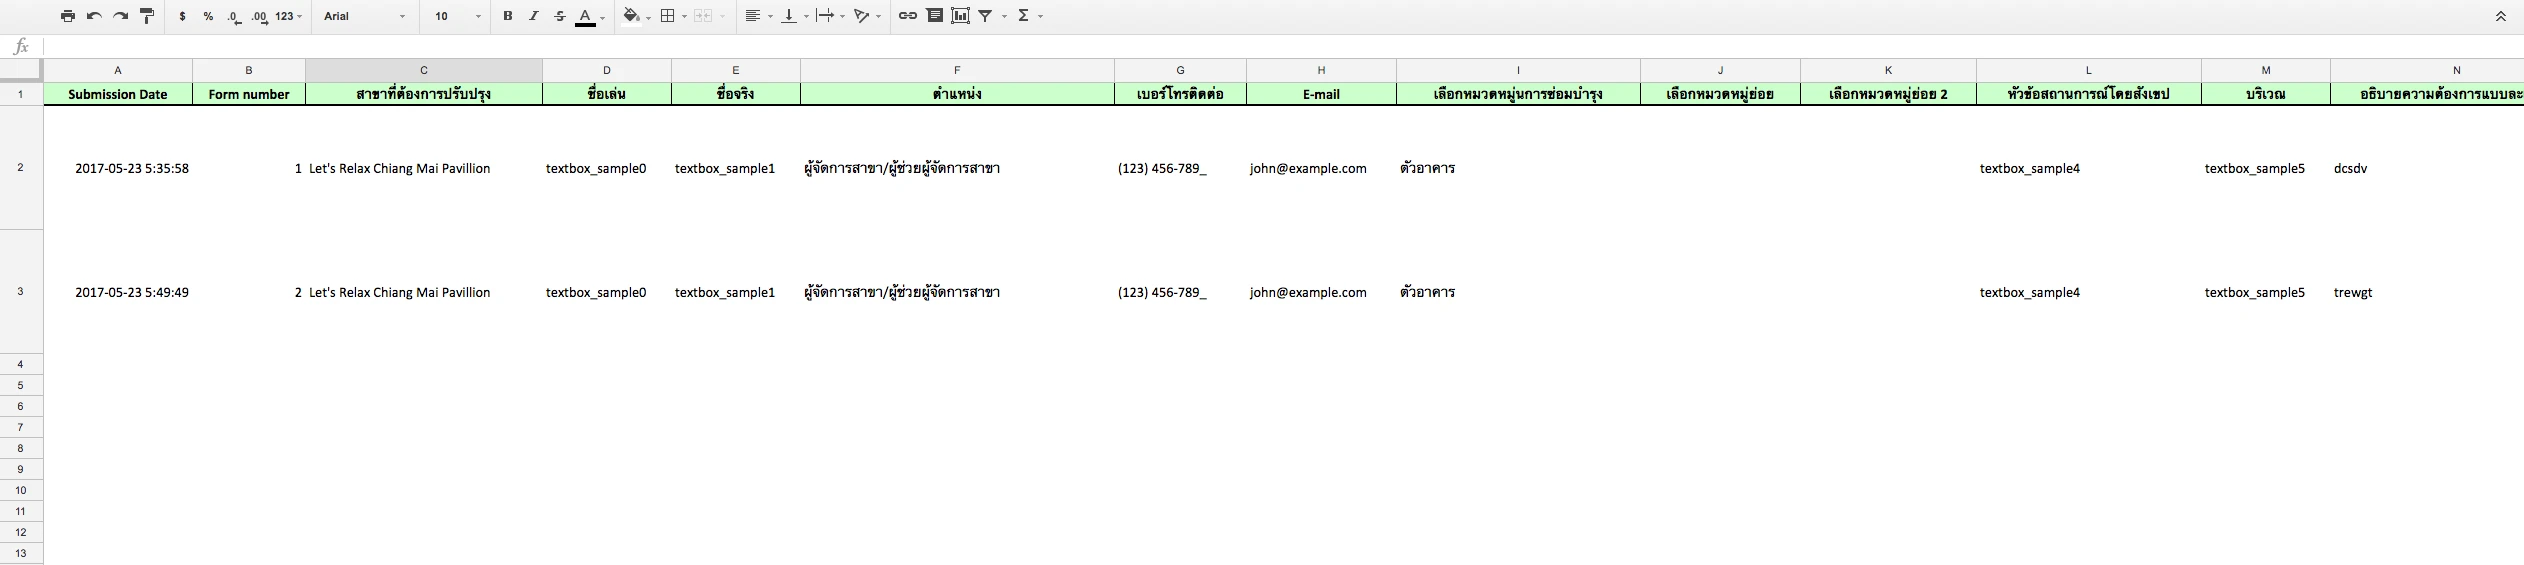 Google Spreadsheet Integration Stopped Working Image 1 Screenshot 20